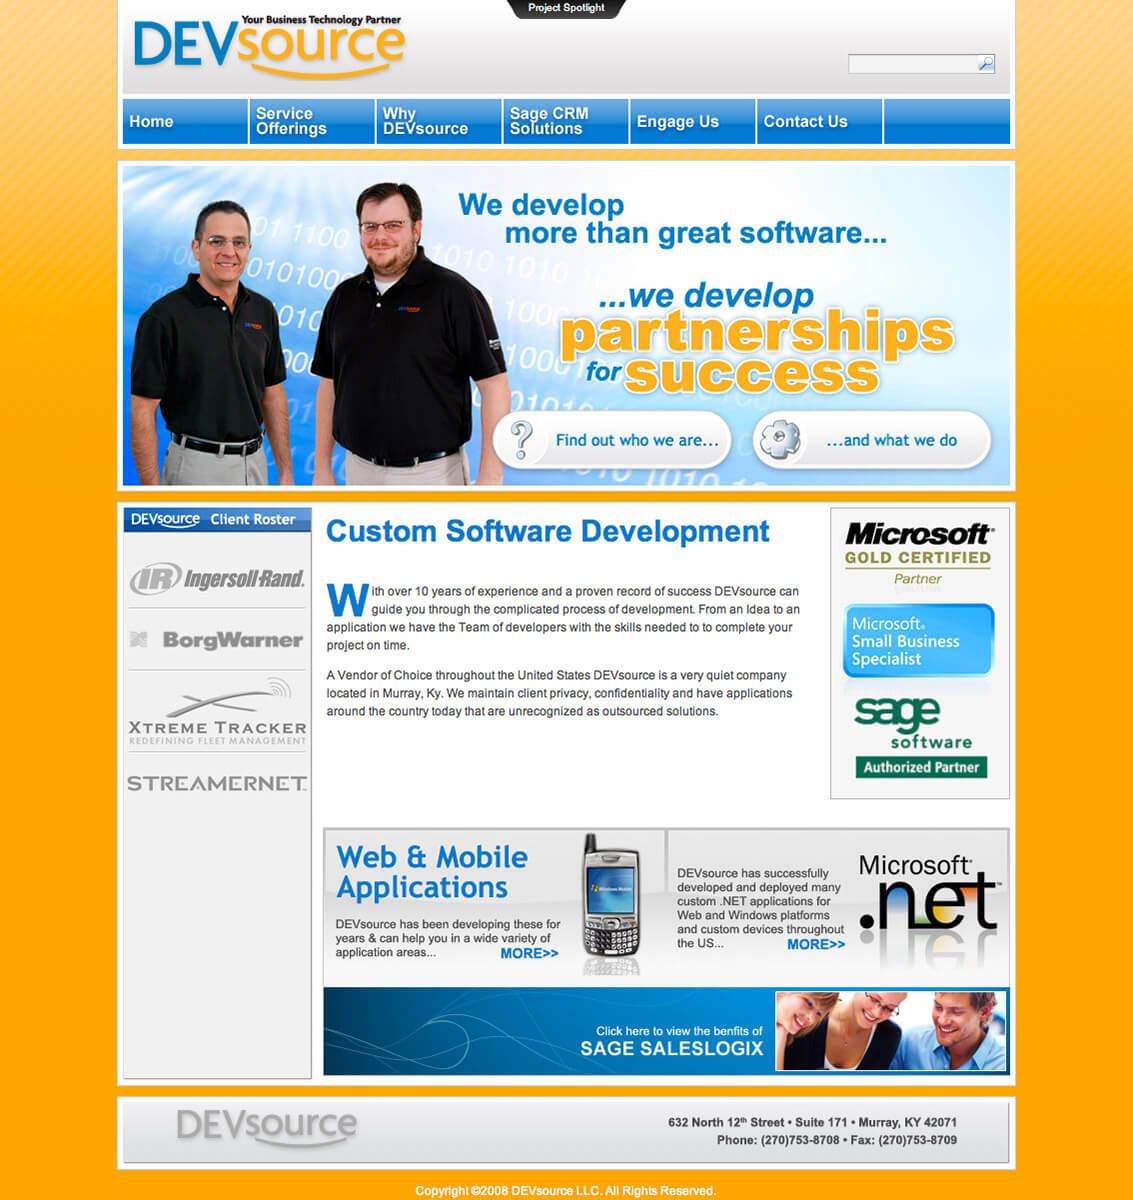 DEVsource web design by EyeSite Creations